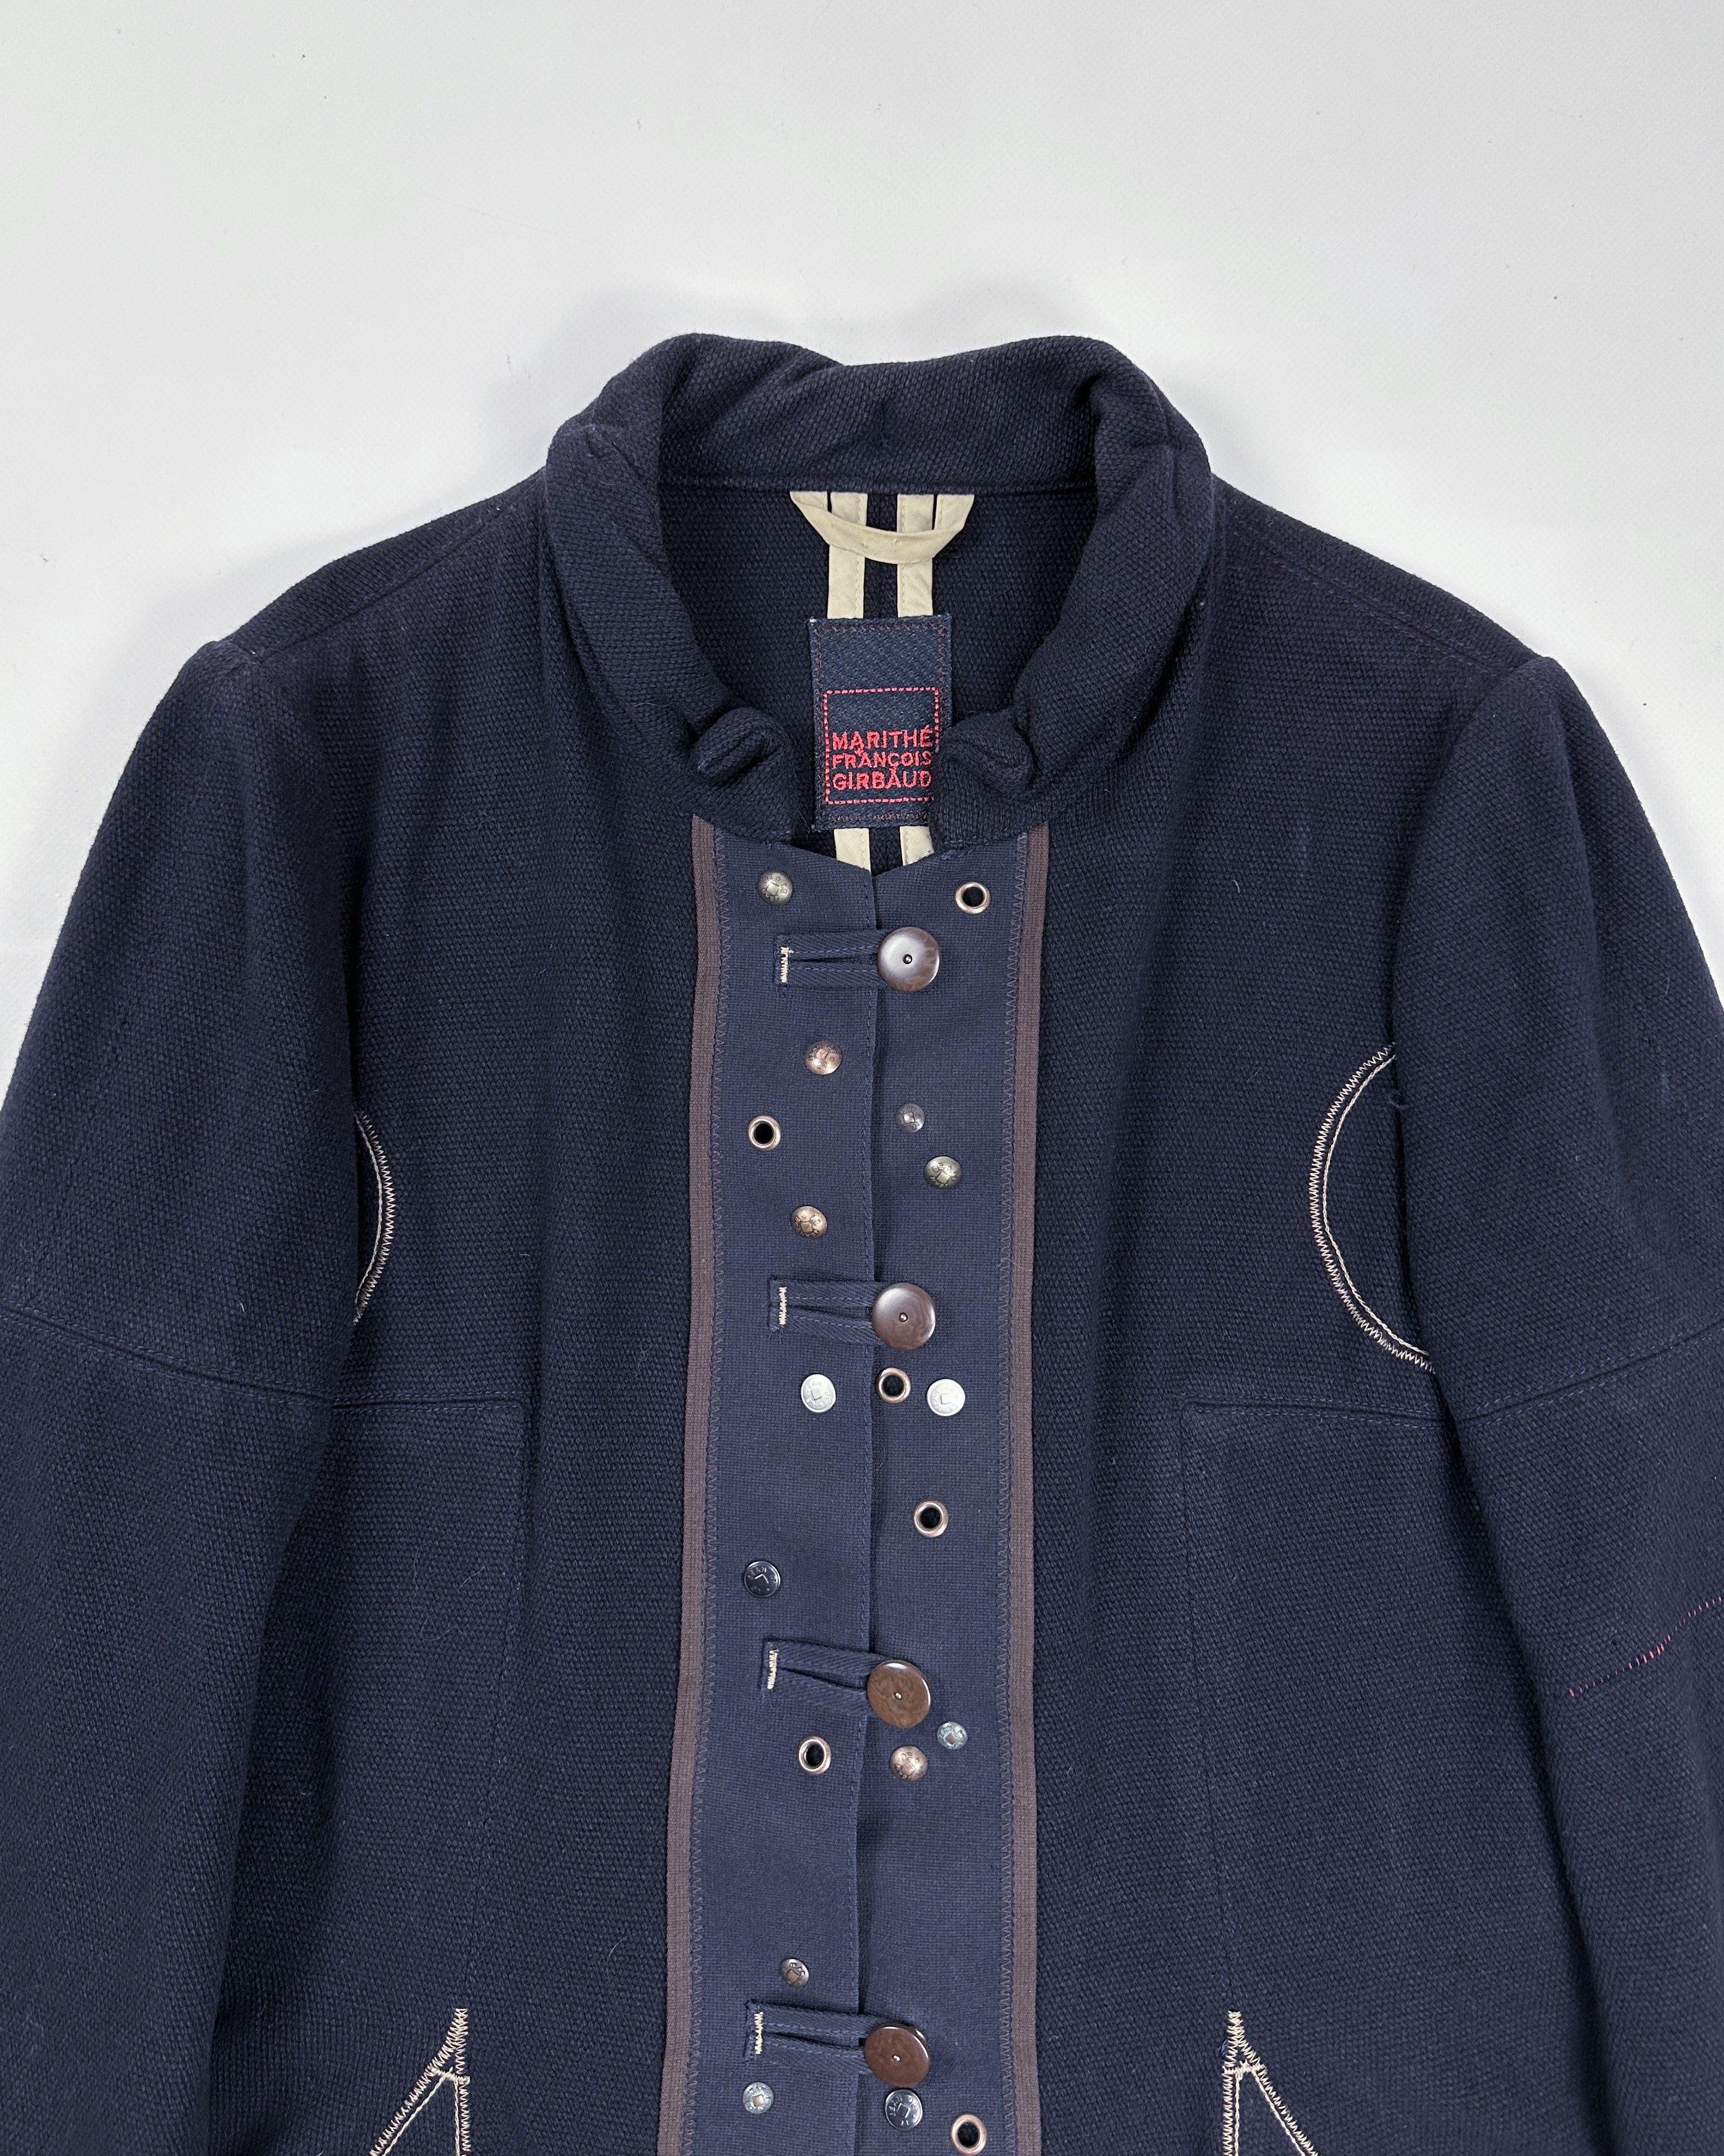 Marithé Francois Girbaud 18-Butons Wool Jacket 2000's – Vintage TTS